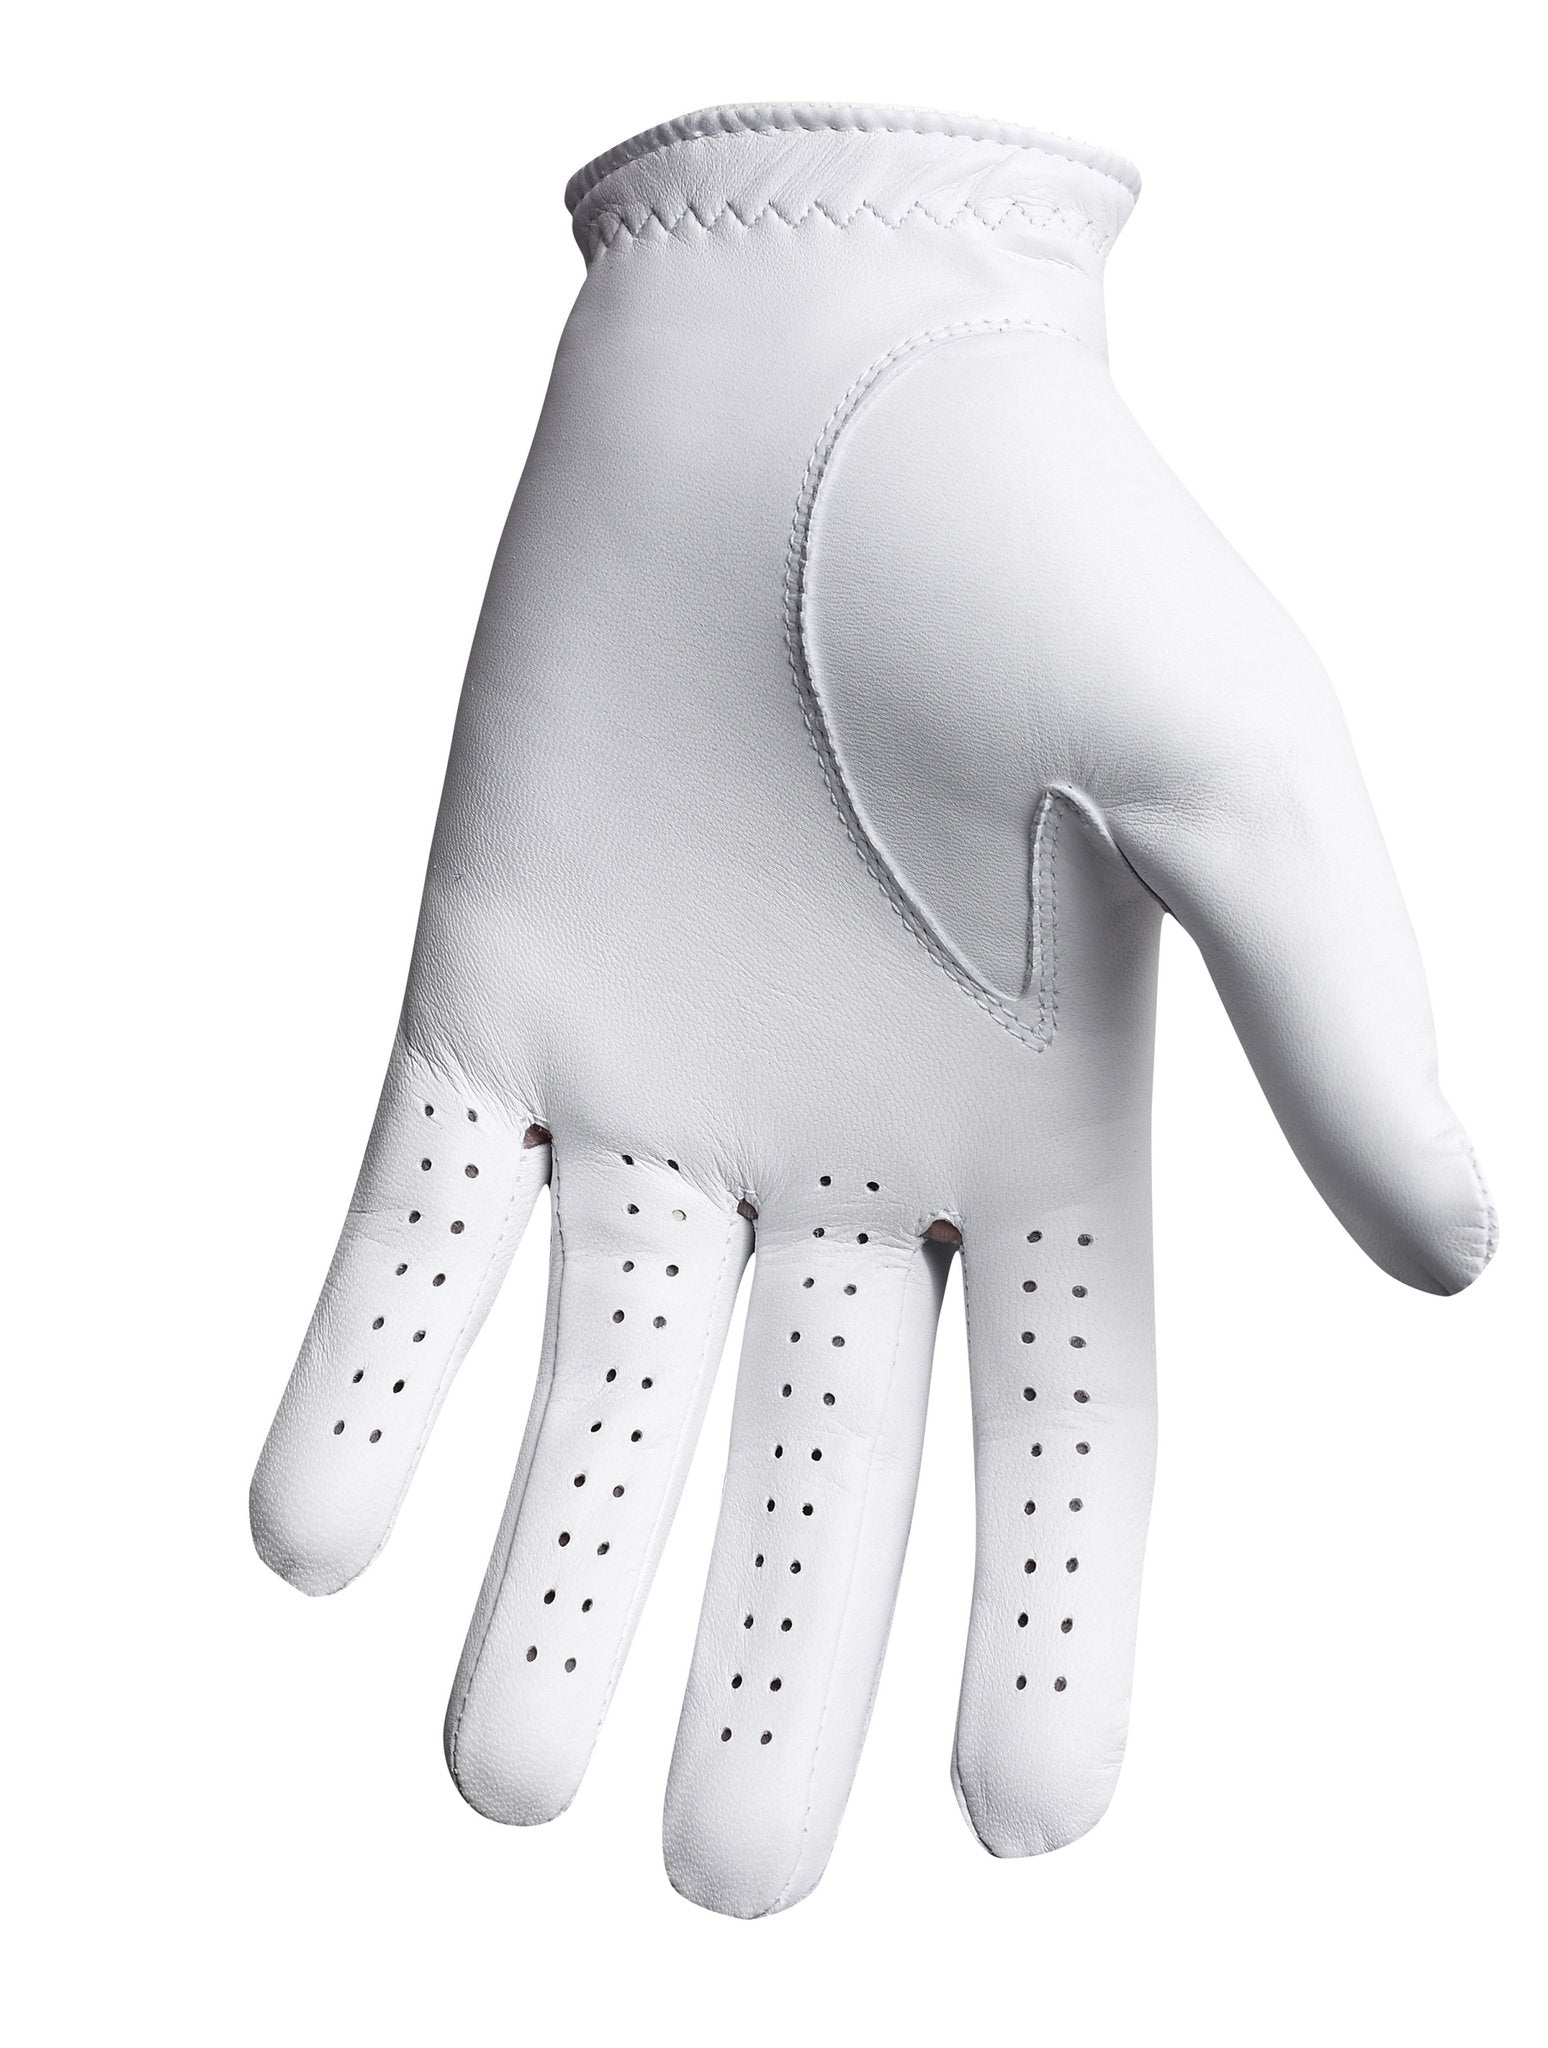 FootJoy Cabrettasof White Golf Glove Right Hand | Evolution Golf  | FootJoy | Evolution Golf 